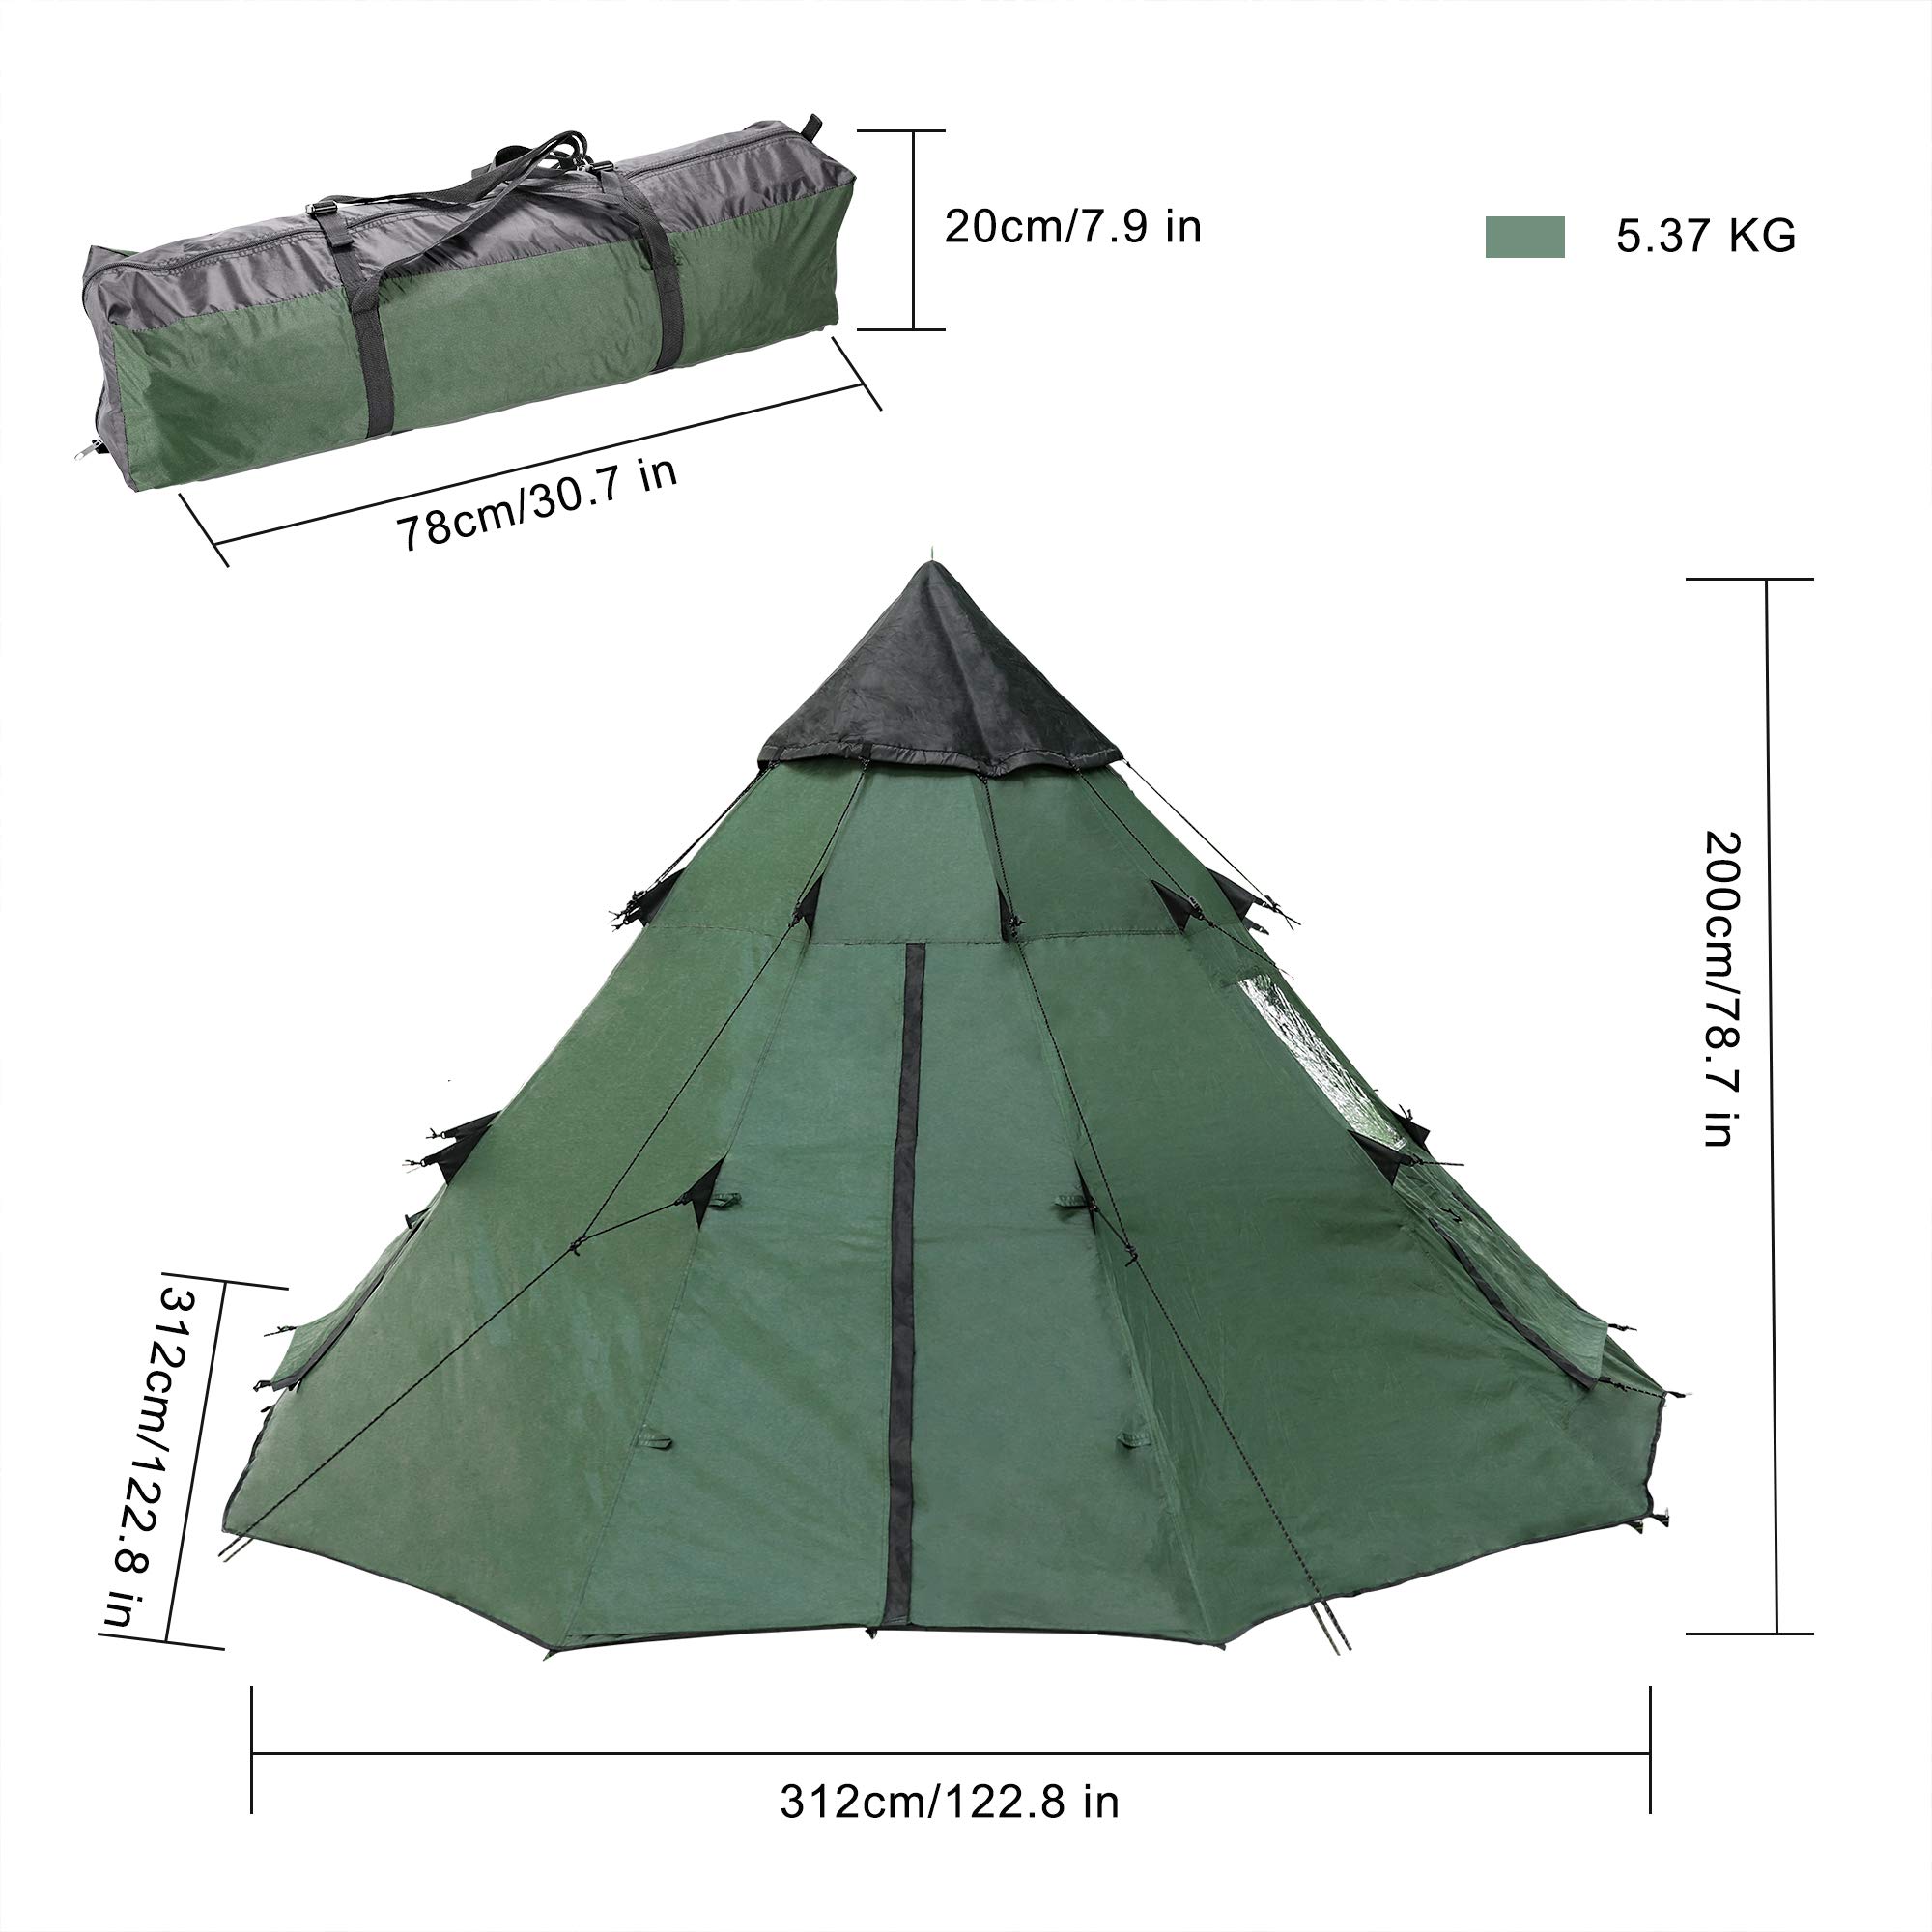 BaiYouDa BaiYouDa 3-4 Person Family Camping Teepee Tent Outdoor Rainproof Waterproof Suitable for Camping Hiking Holidays